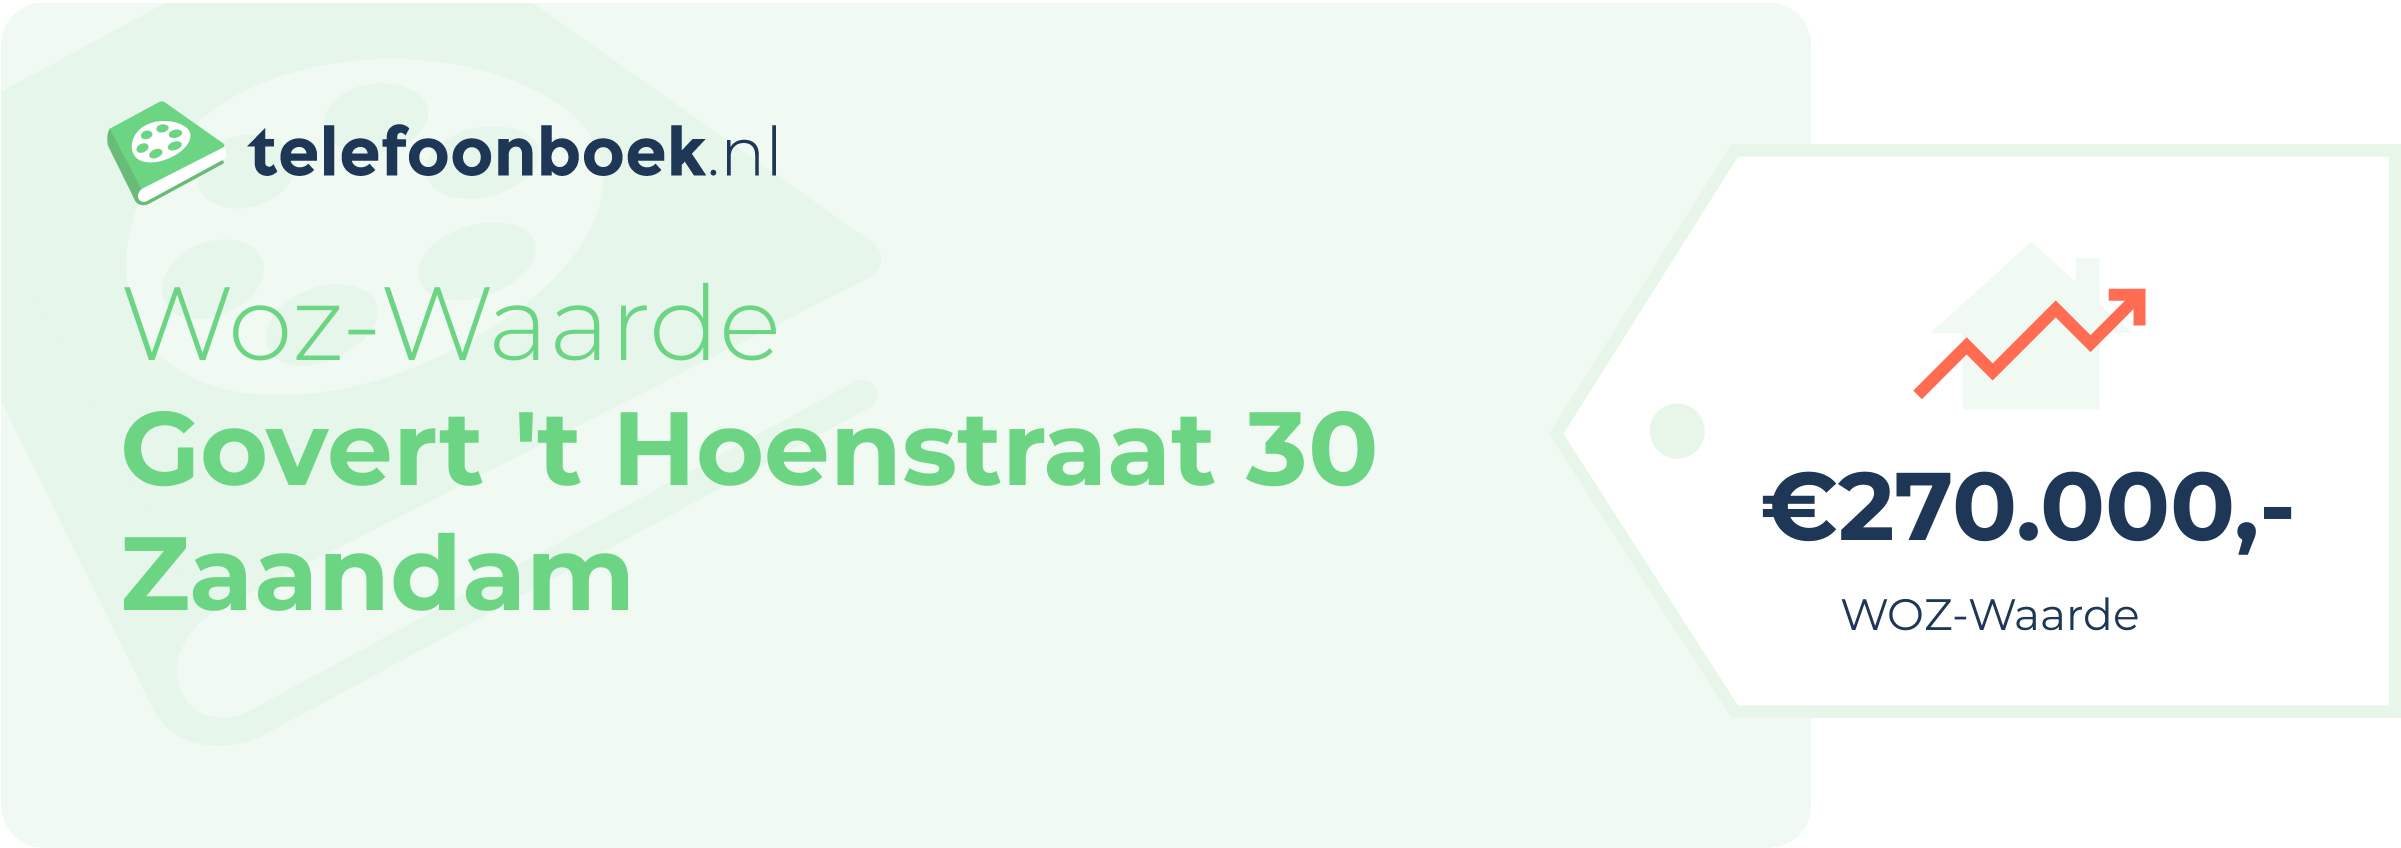 WOZ-waarde Govert 't Hoenstraat 30 Zaandam